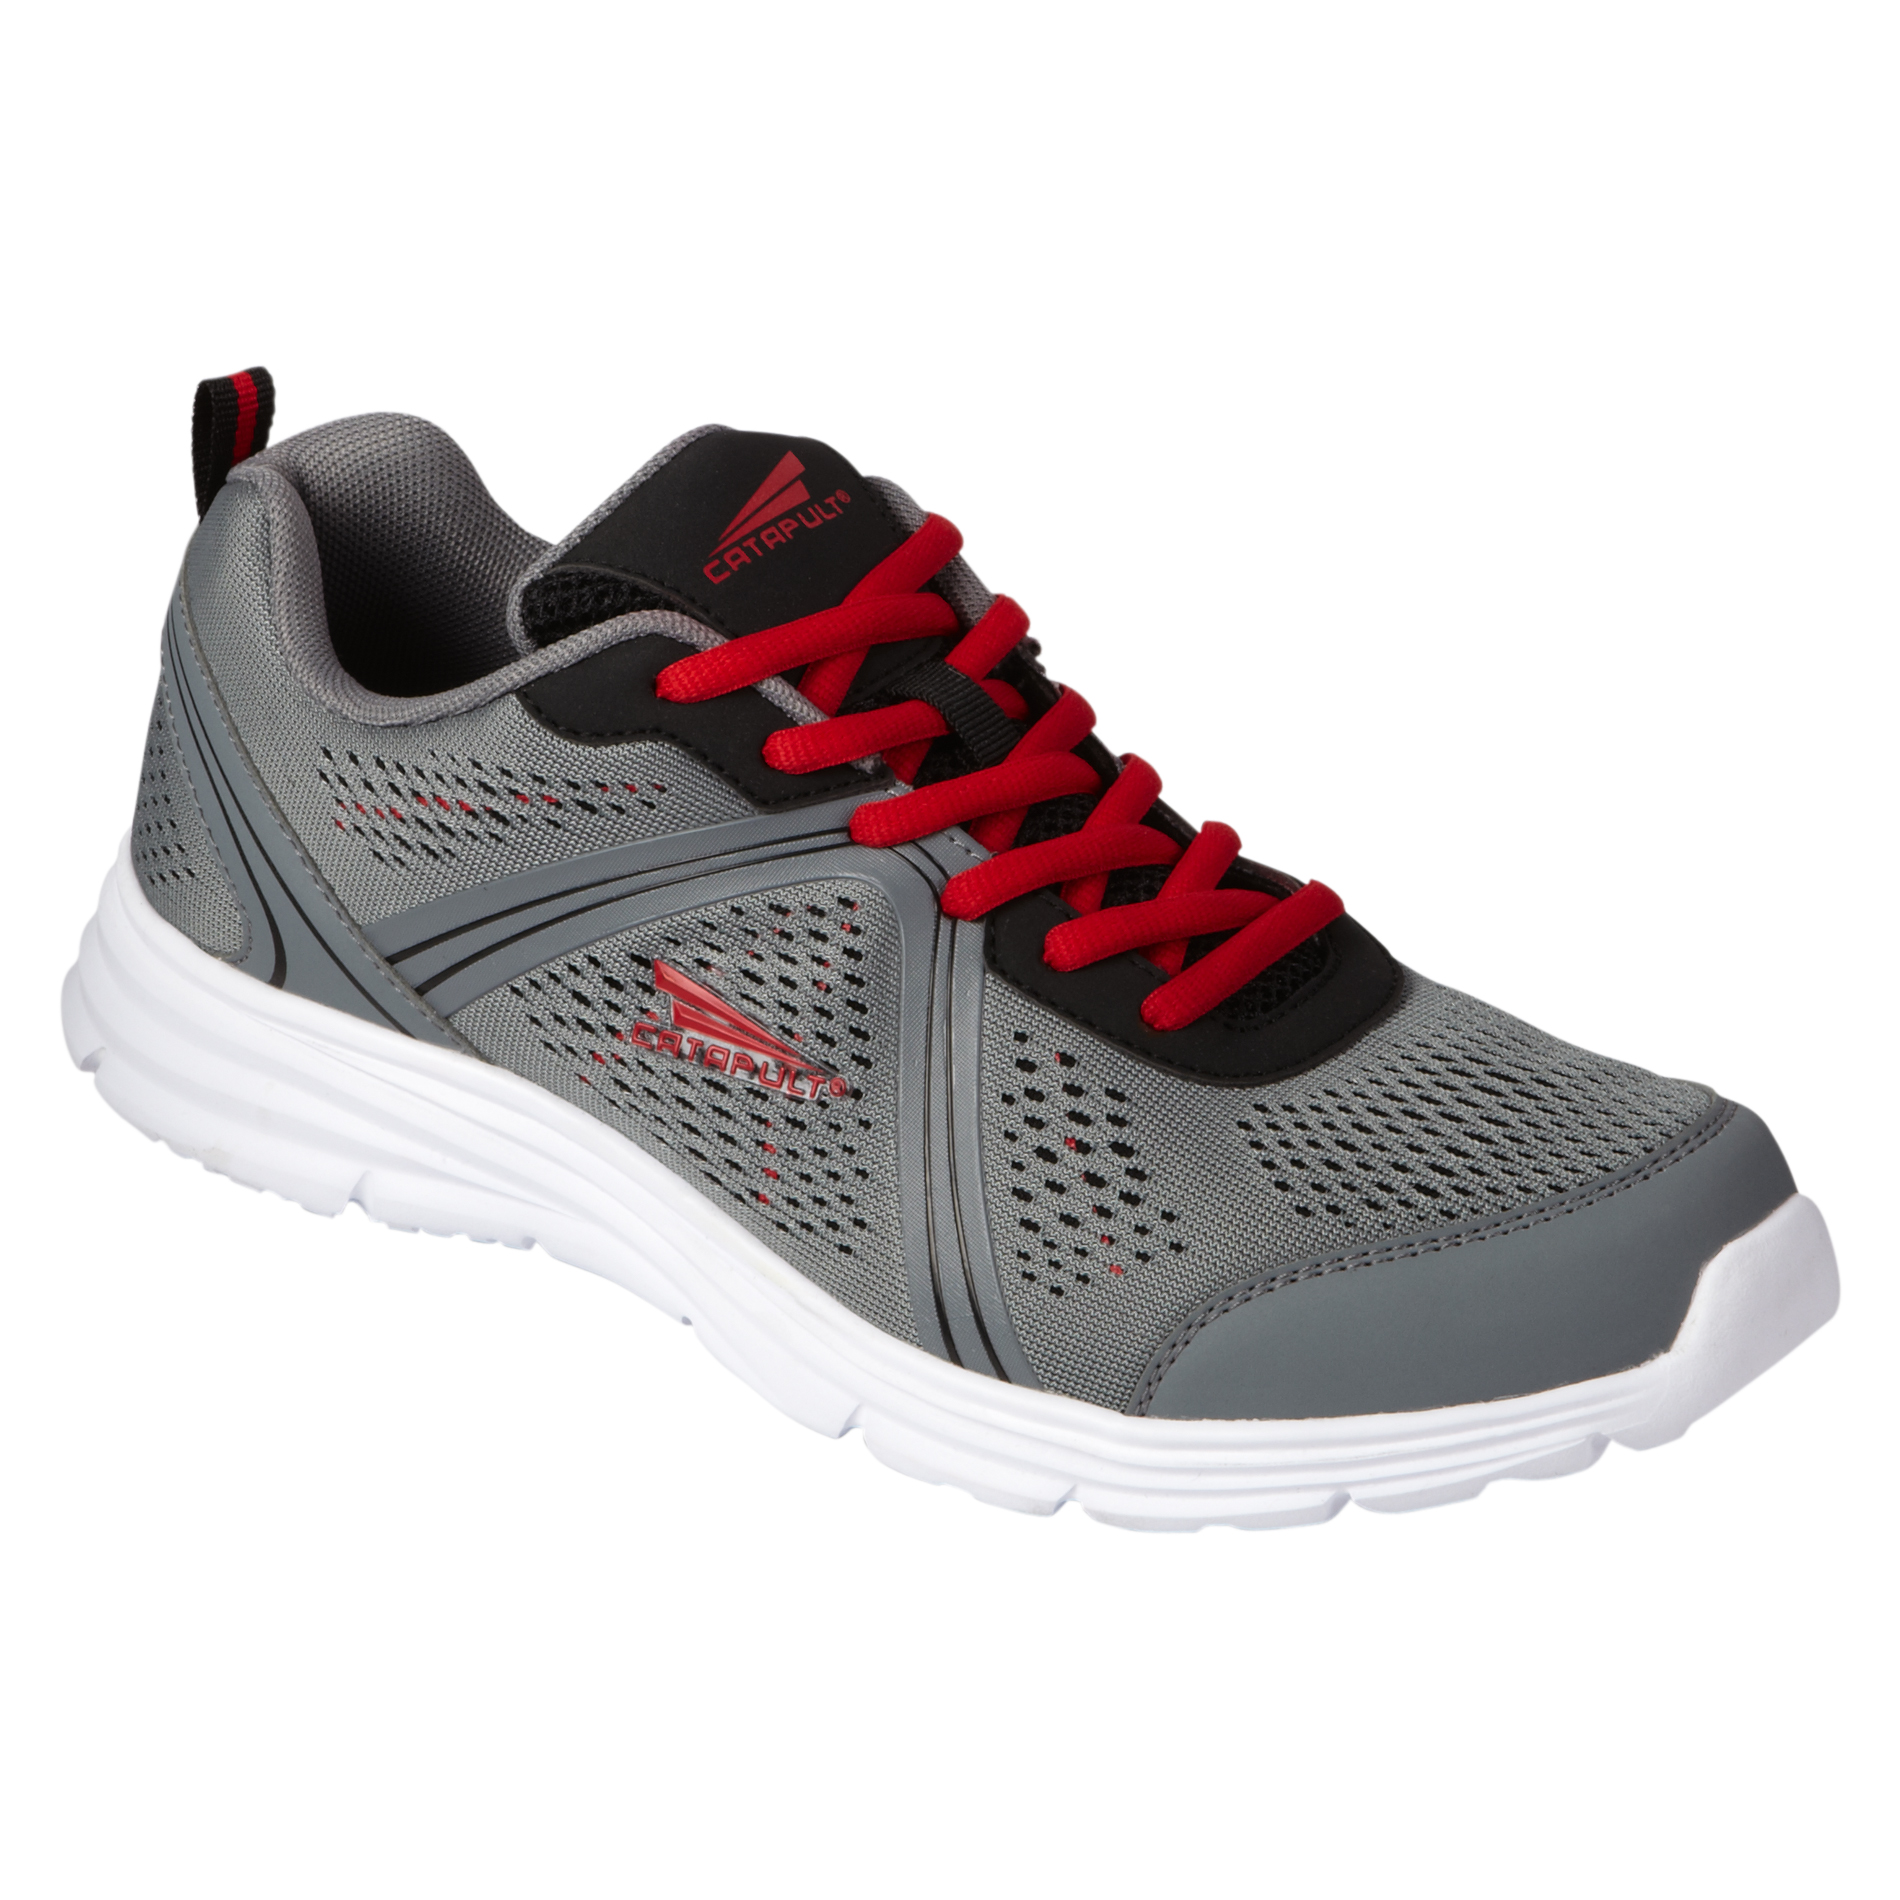 CATAPULT Mens Penn Running Athletic Shoe - Grey/Red